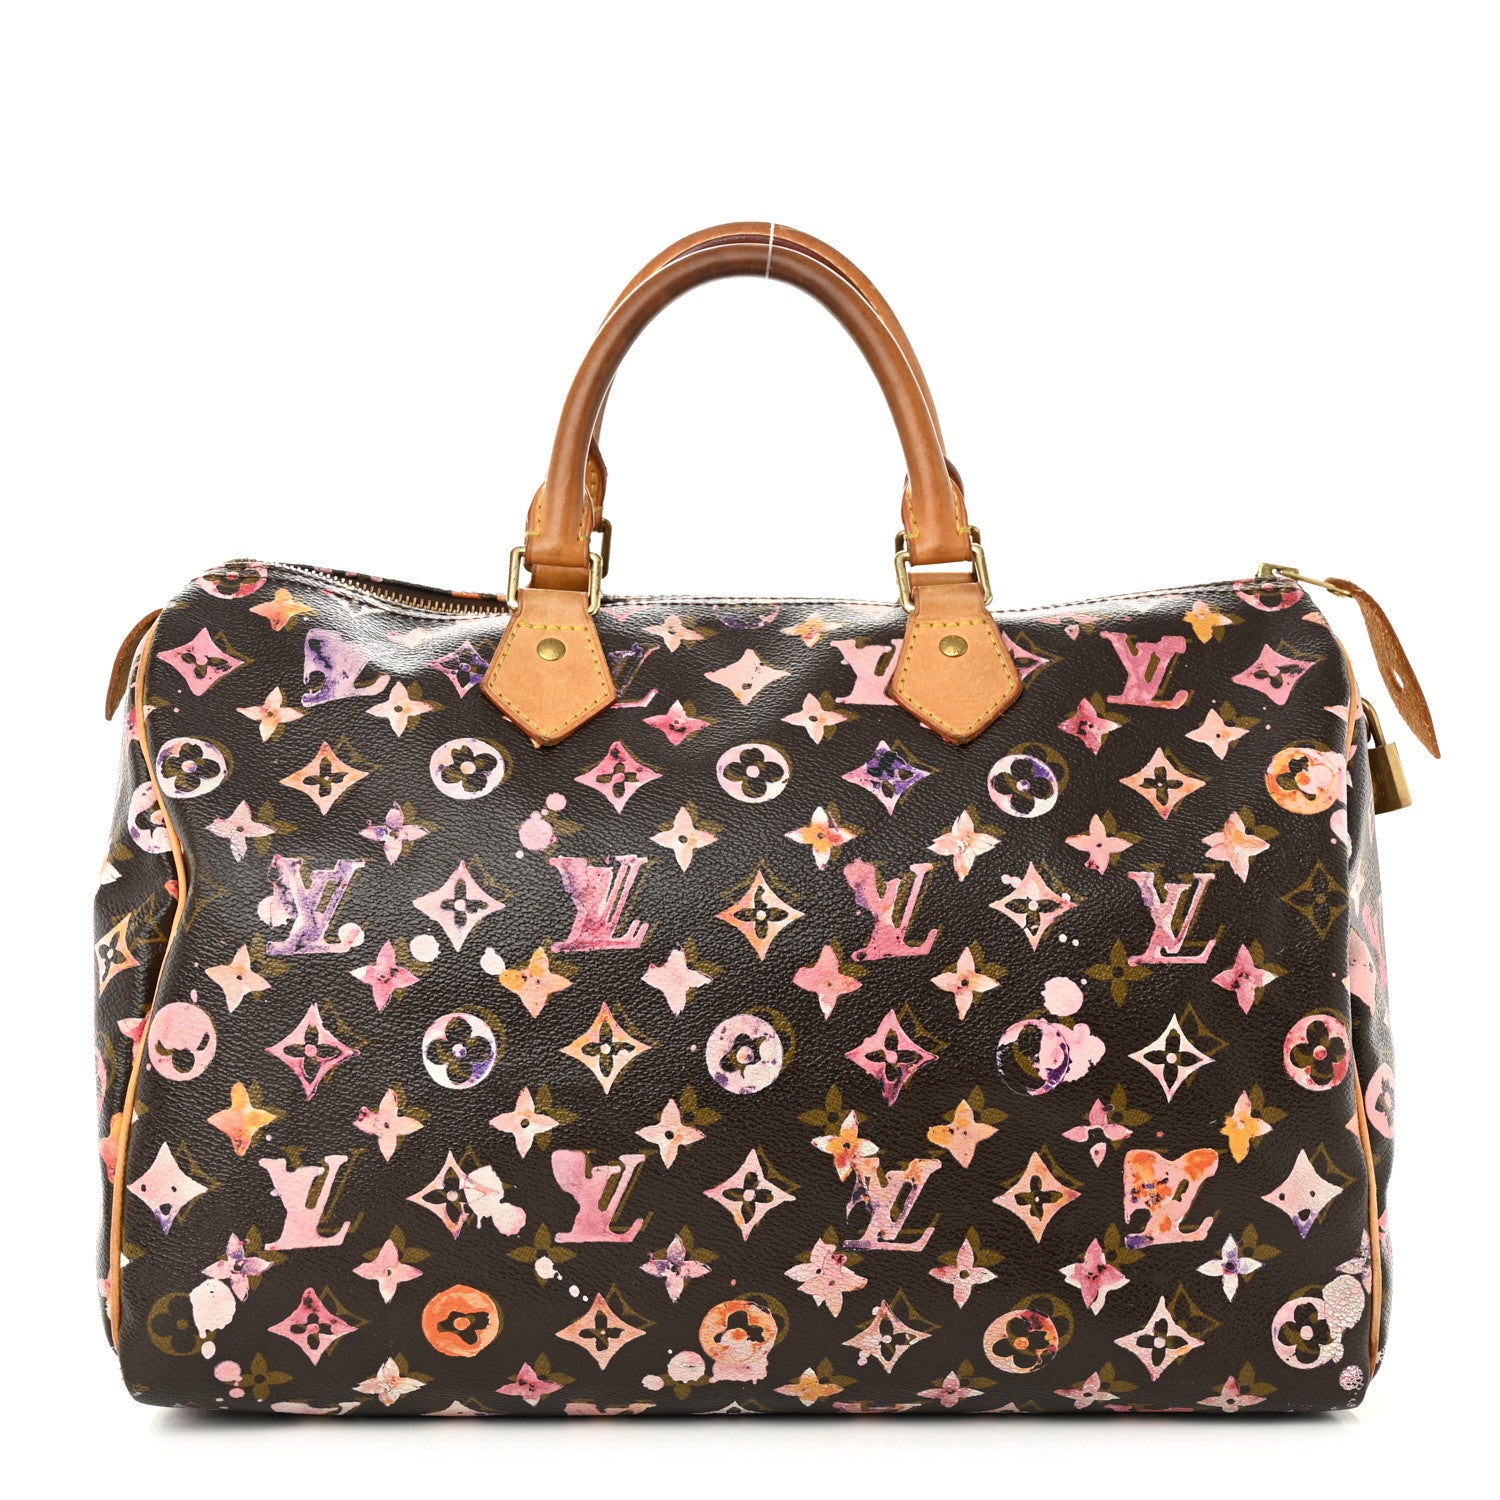 Most Expensive Louis Vuitton Bags aquarella speedy